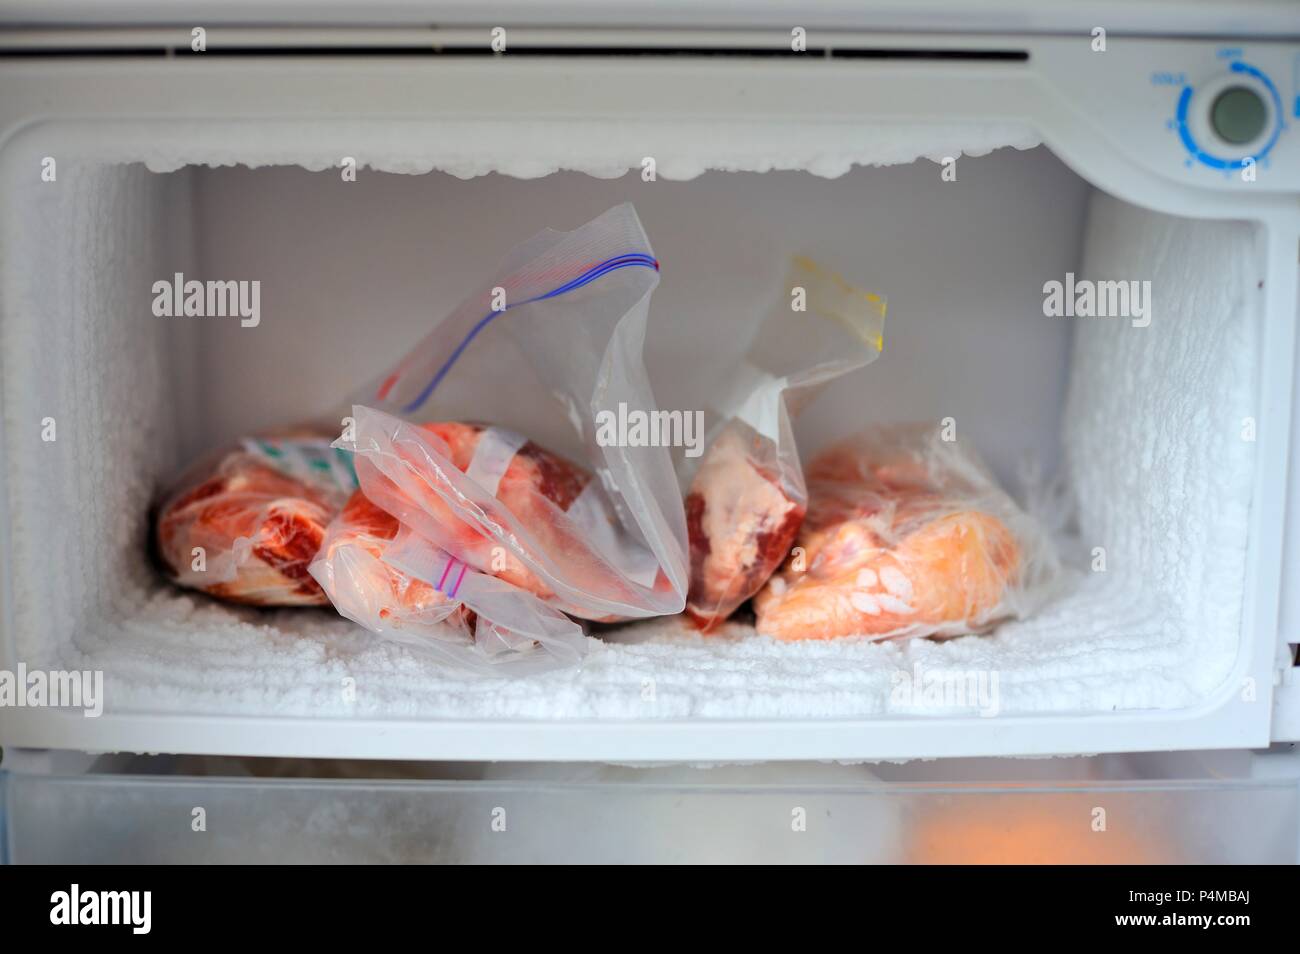 https://c8.alamy.com/comp/P4MBAJ/frozen-meat-in-a-freezer-P4MBAJ.jpg